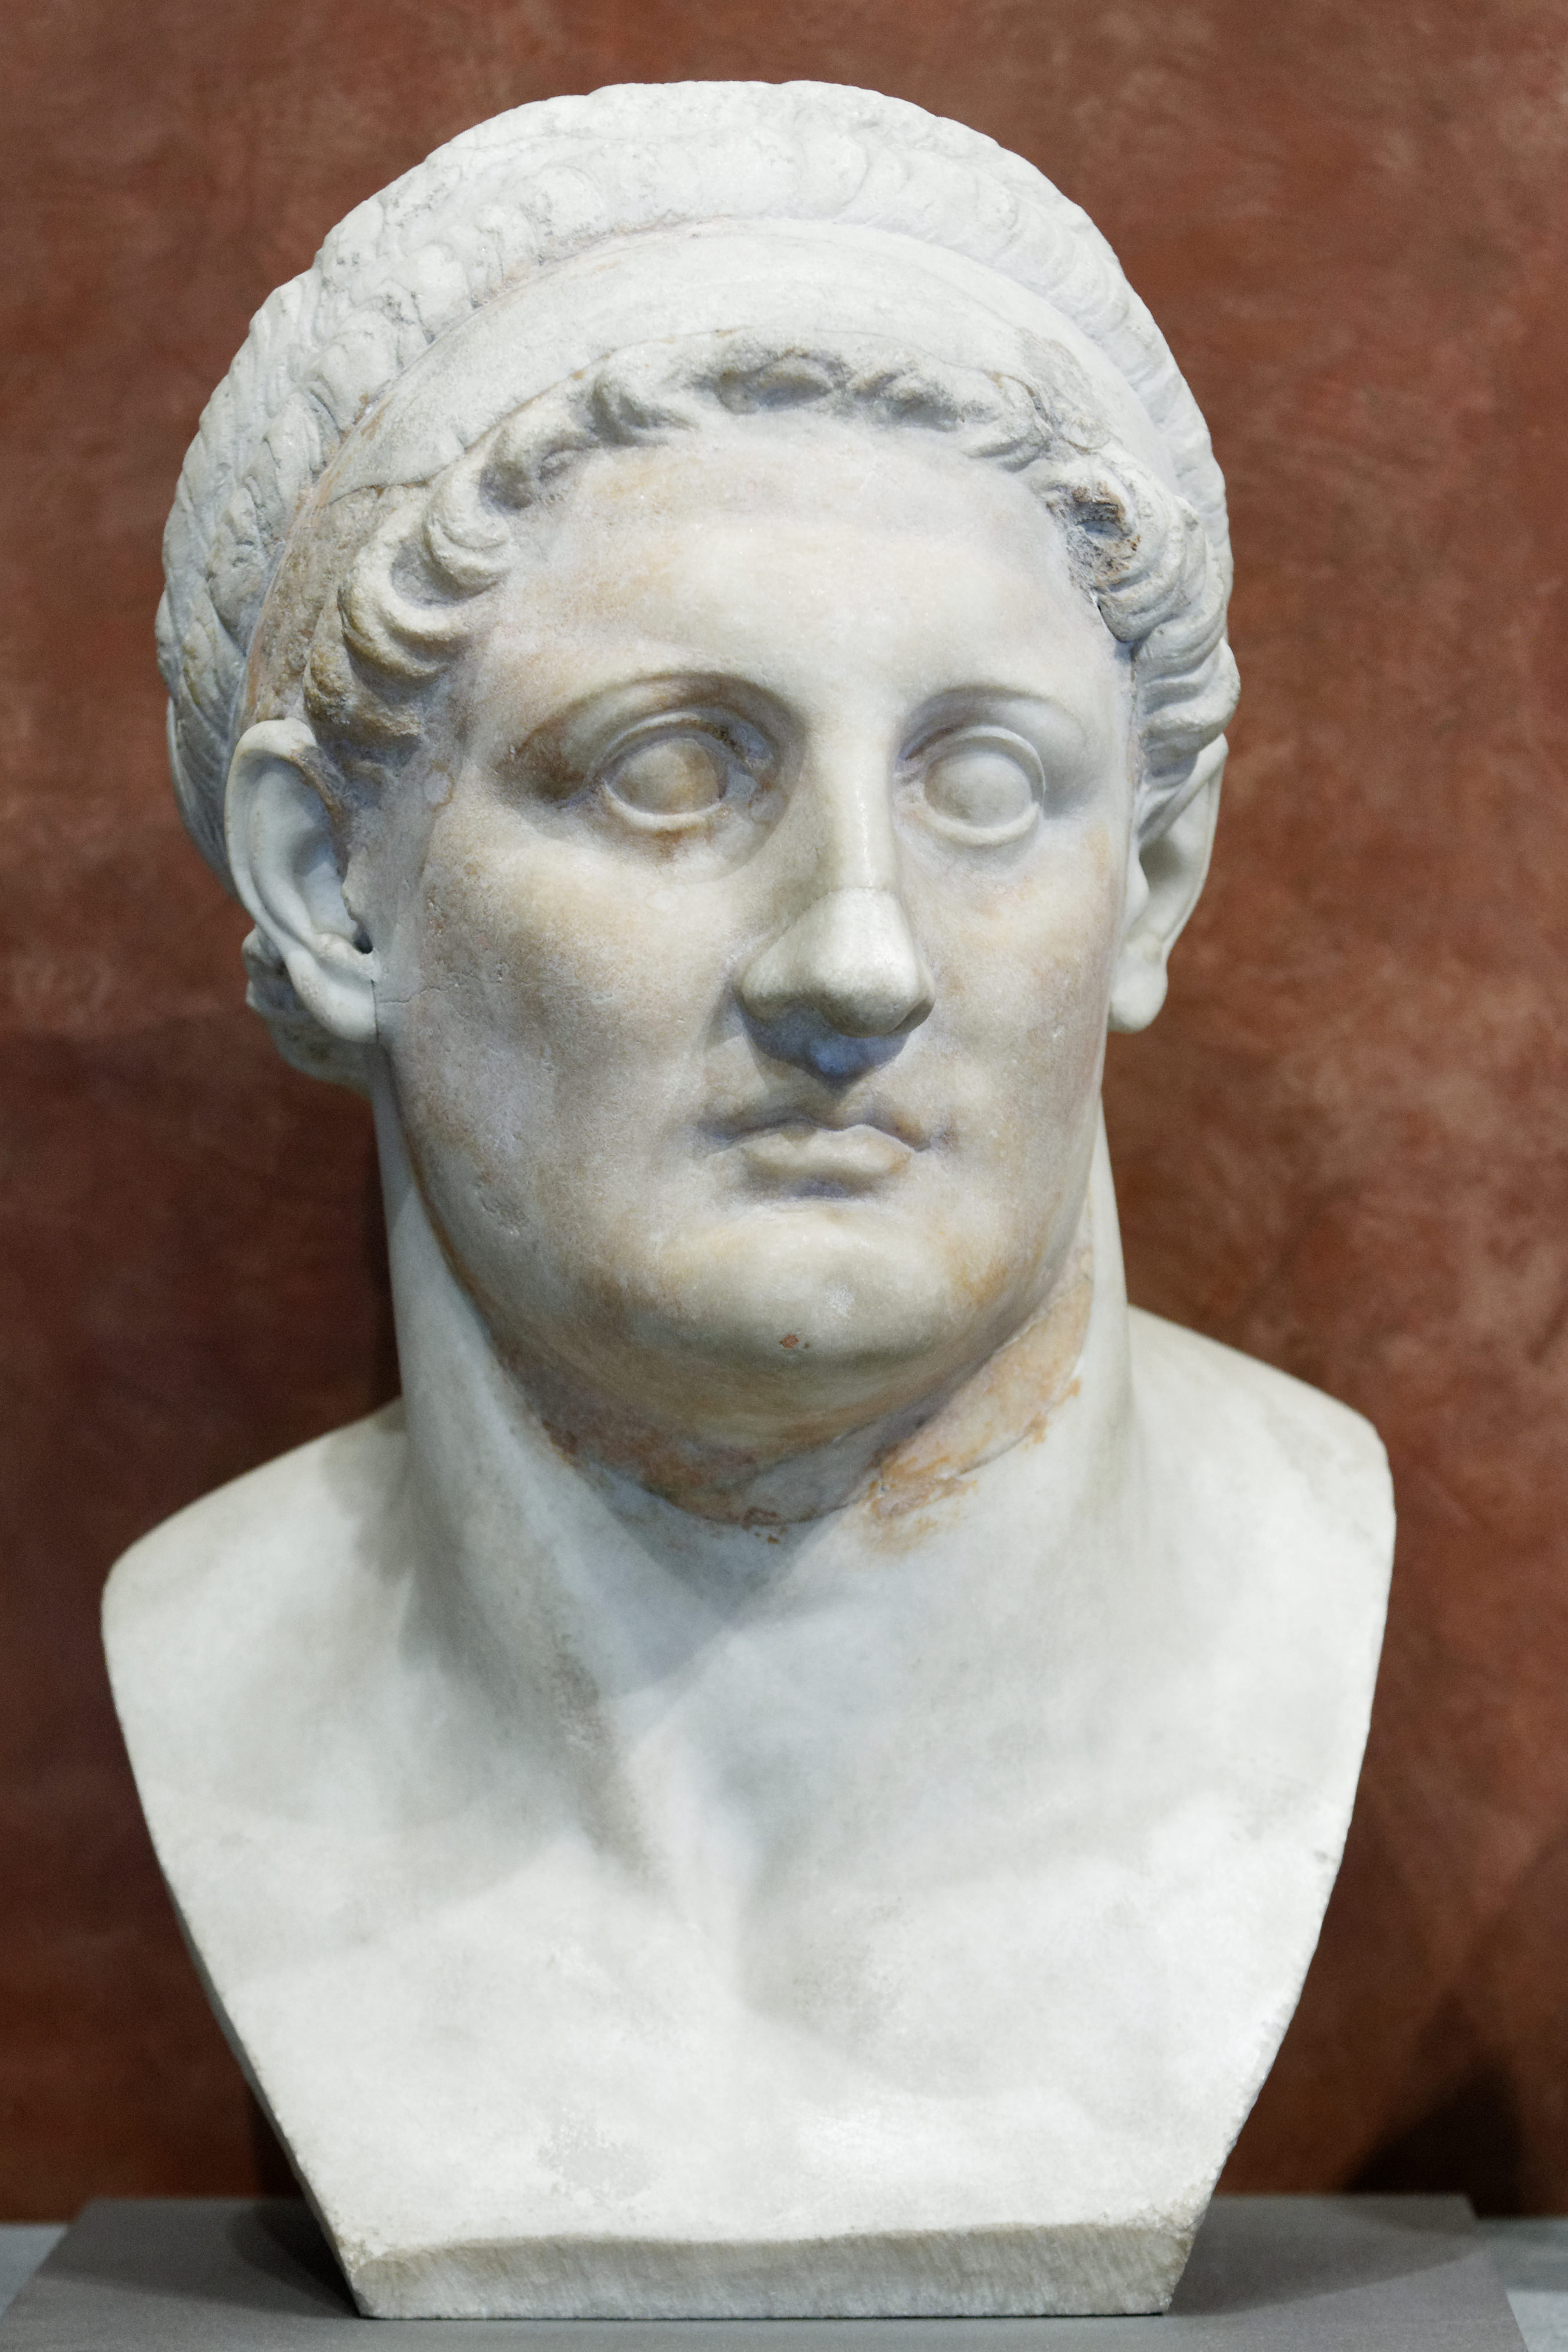 Ptolomeo II Filadelfo - Enciclopedia de la Historia del Mundo